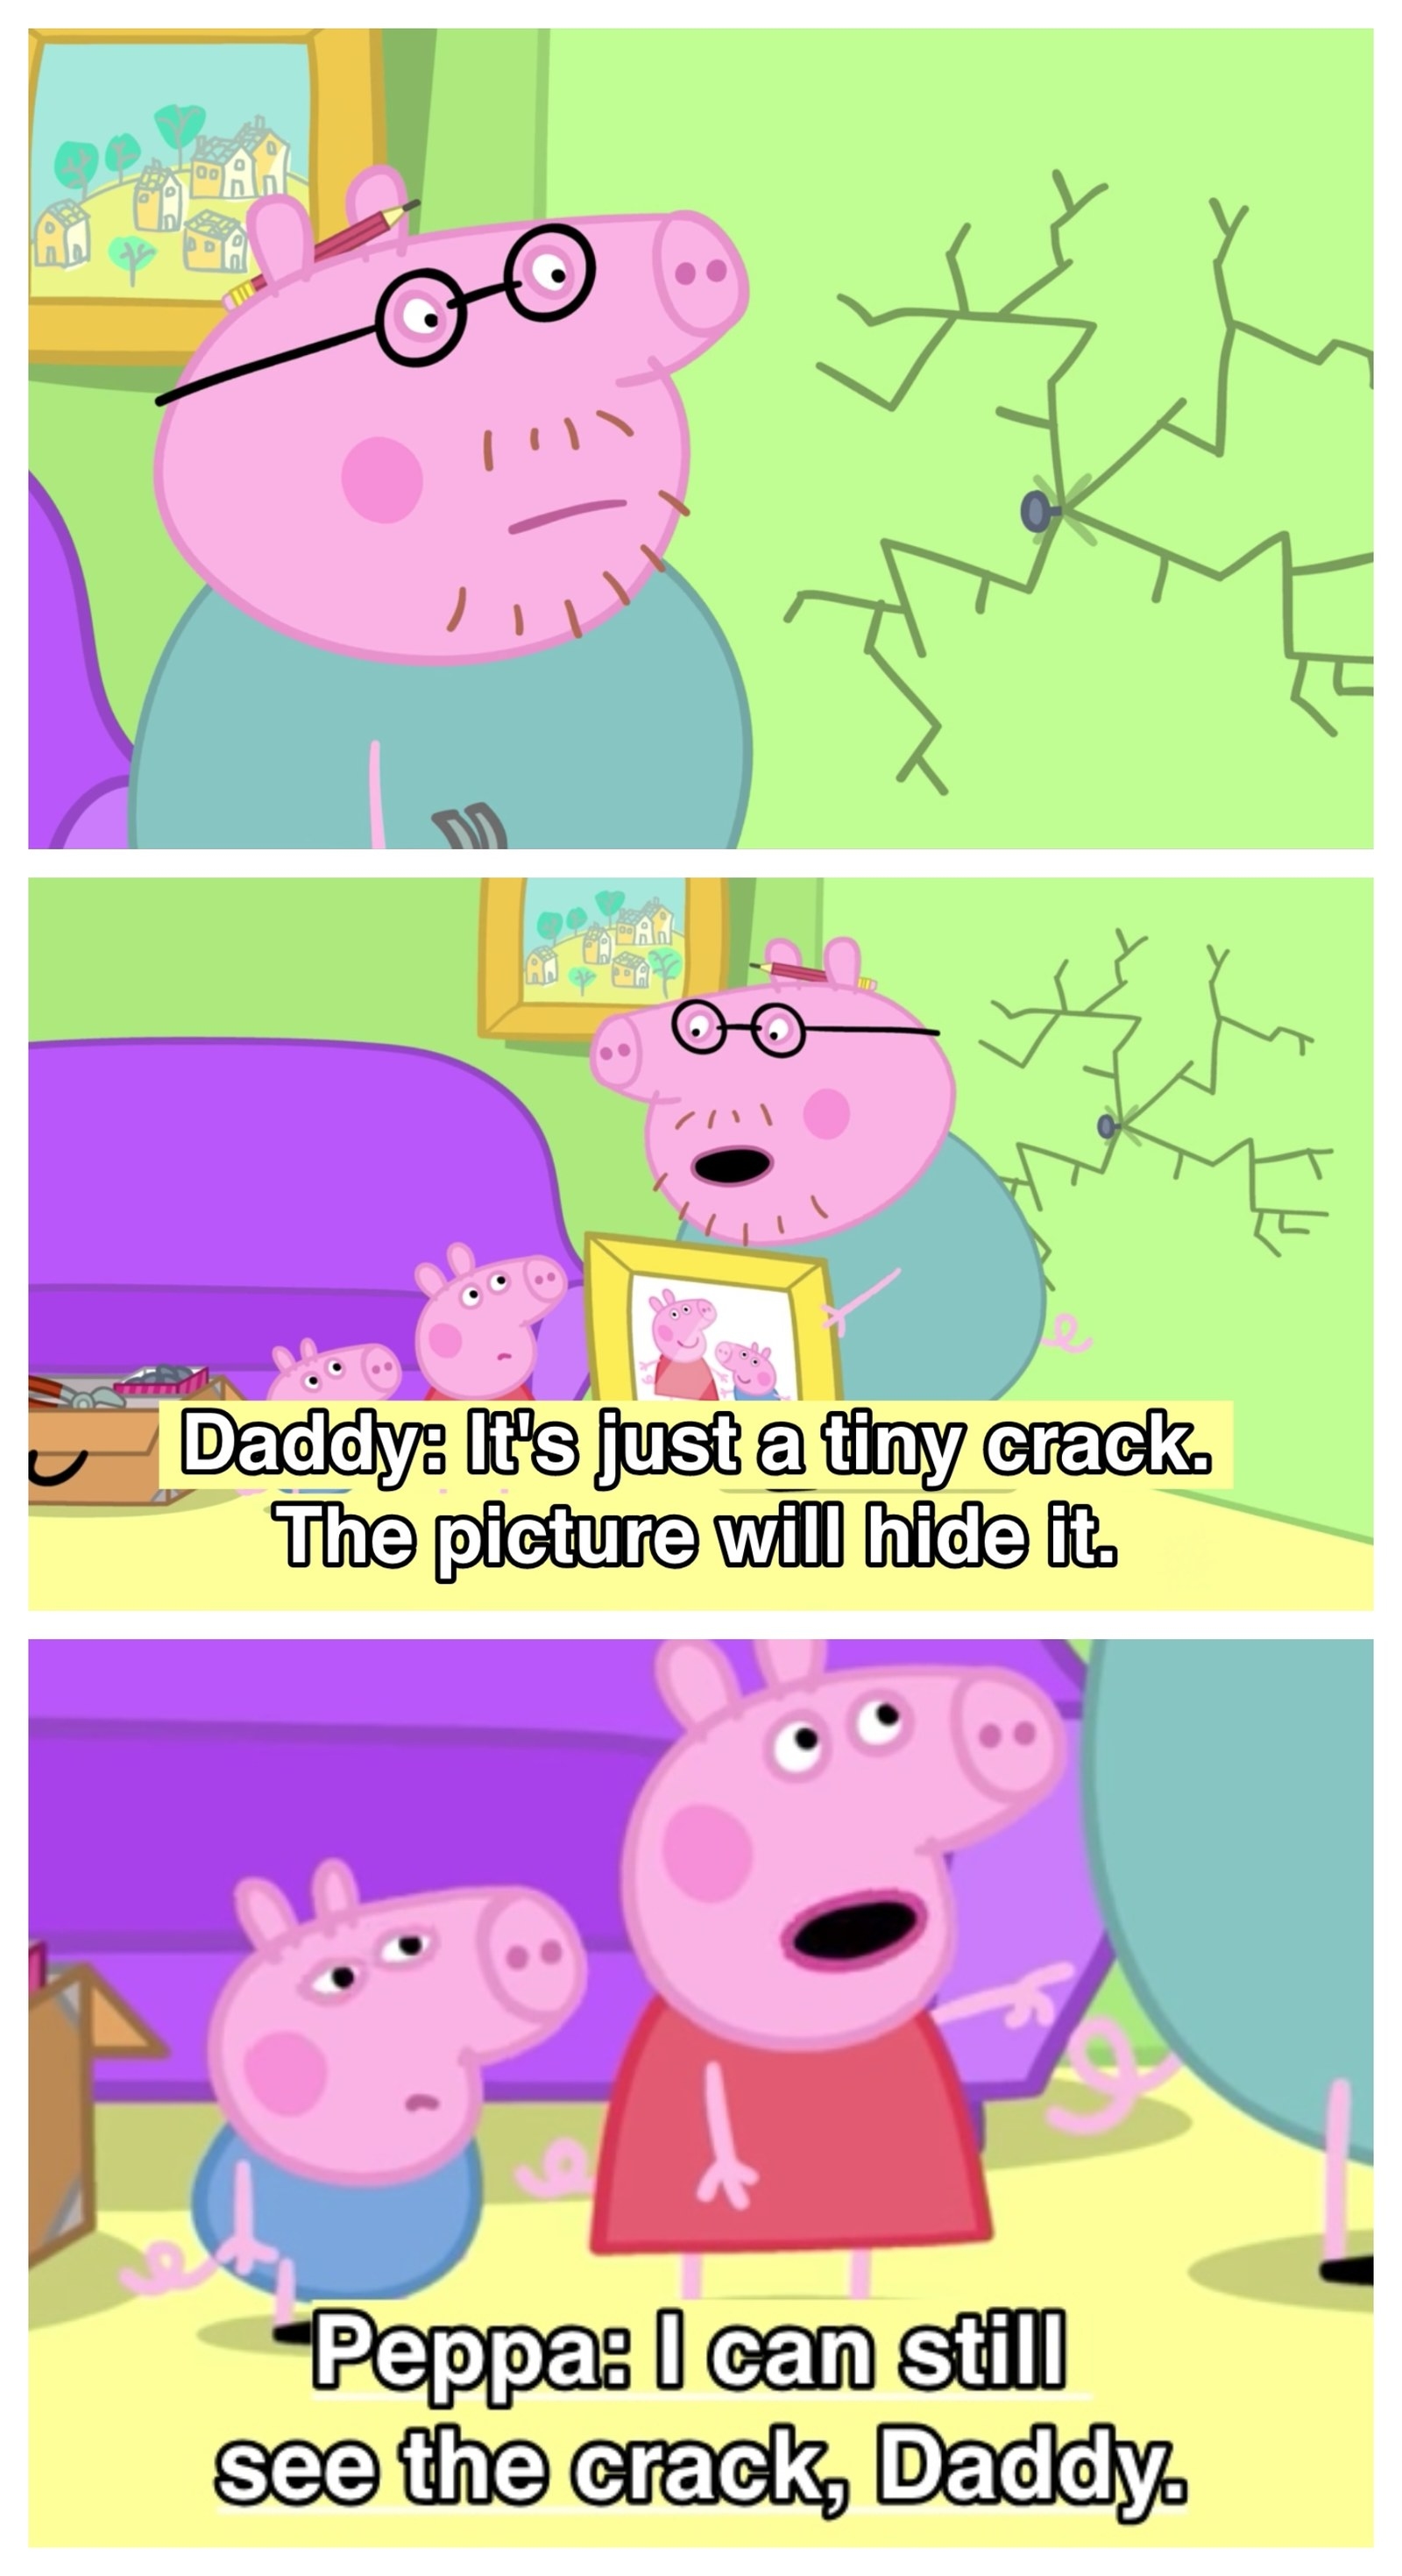 peppa pig saying daddy